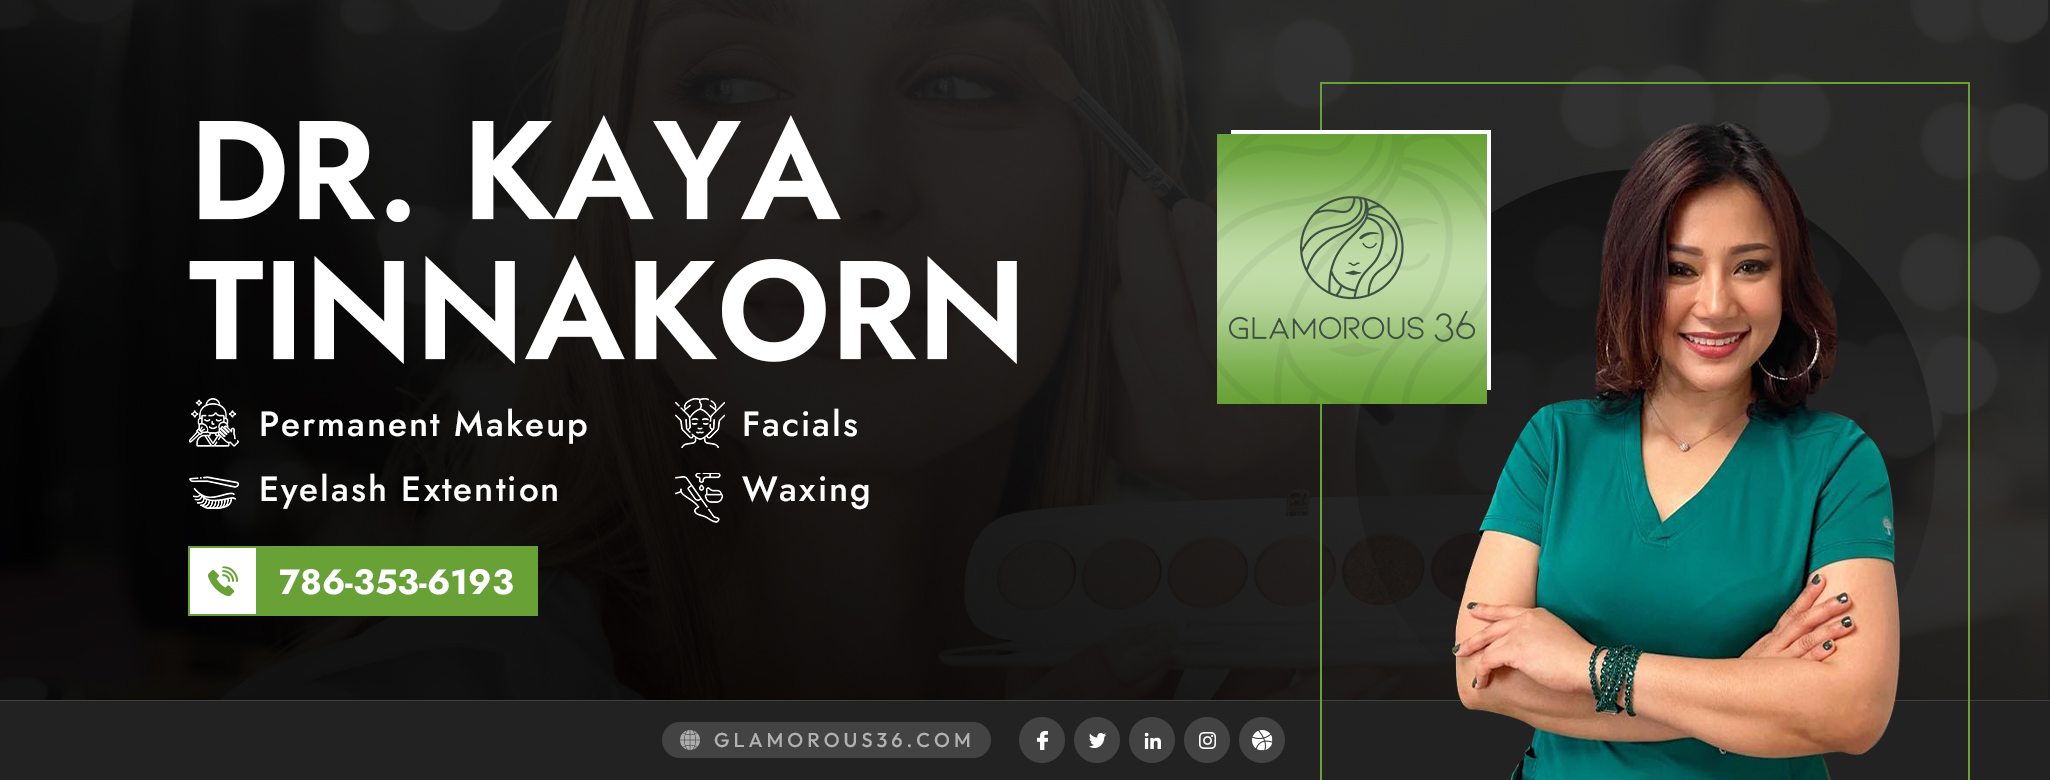 Glamorous36 | Permanent Makeup, Eyelash Extension, Facials & Waxing In Largo